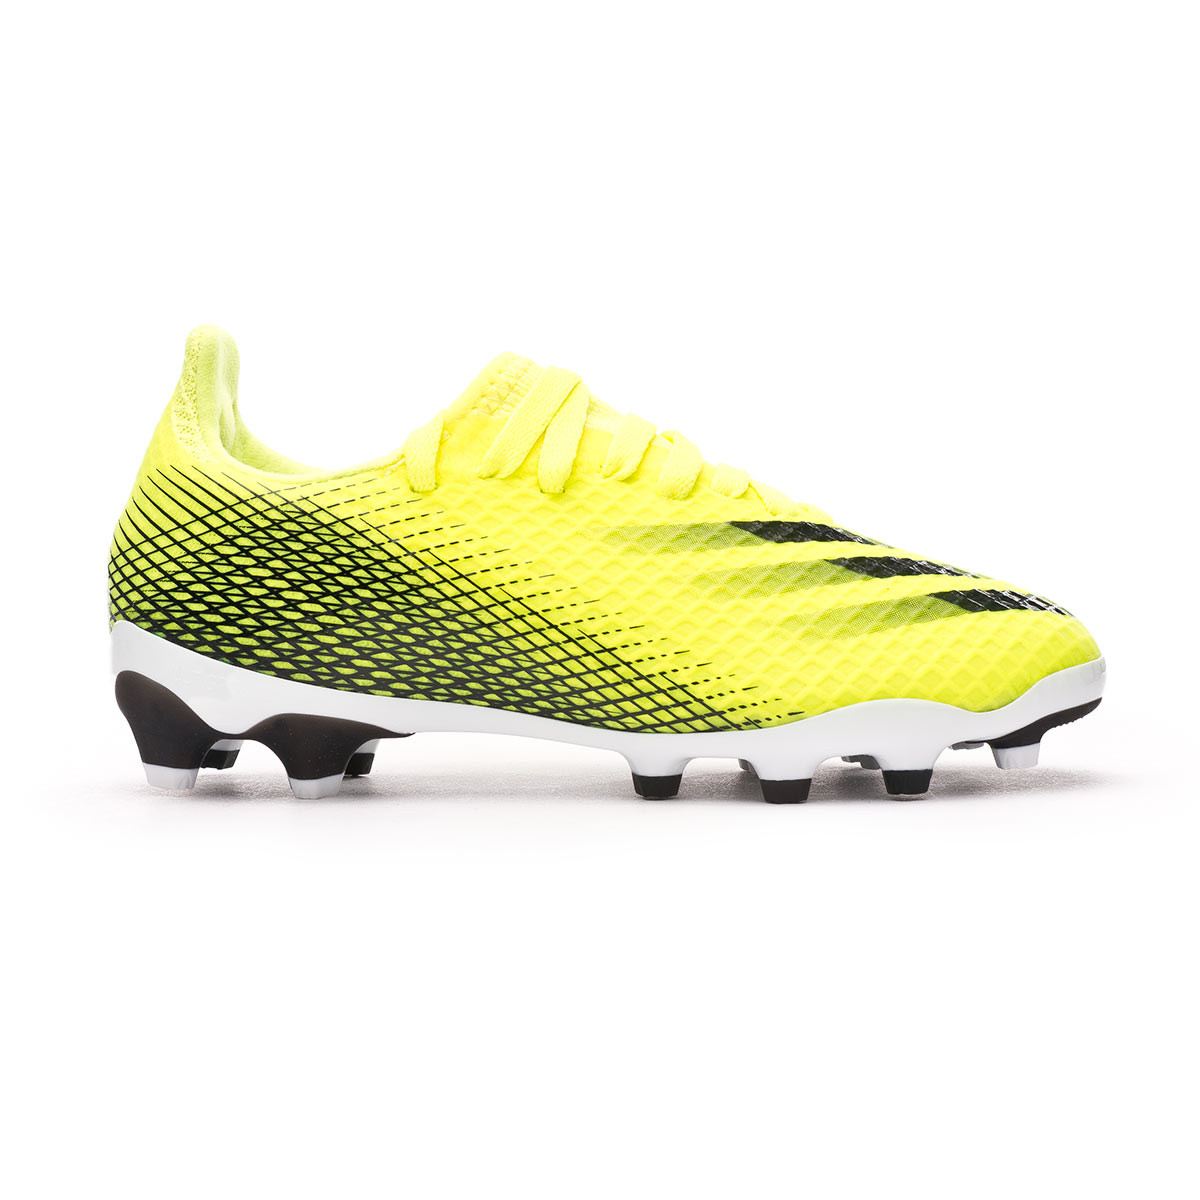 yellow and black adidas football boots